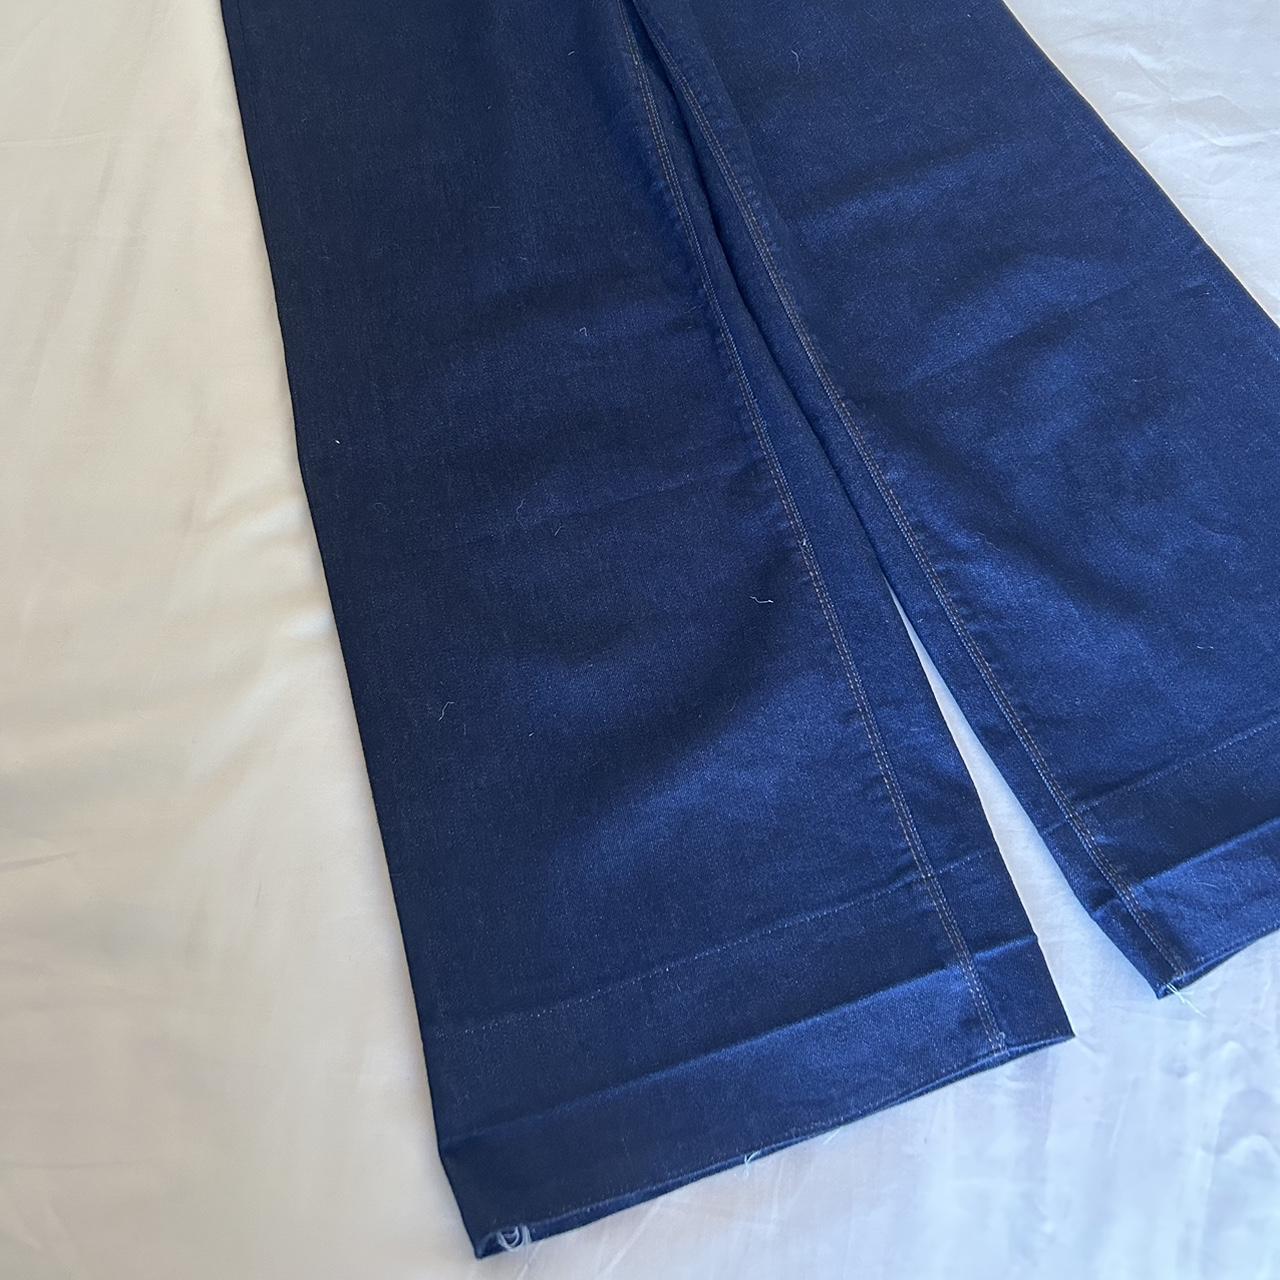 Macy's Women's Navy and Blue Jeans | Depop